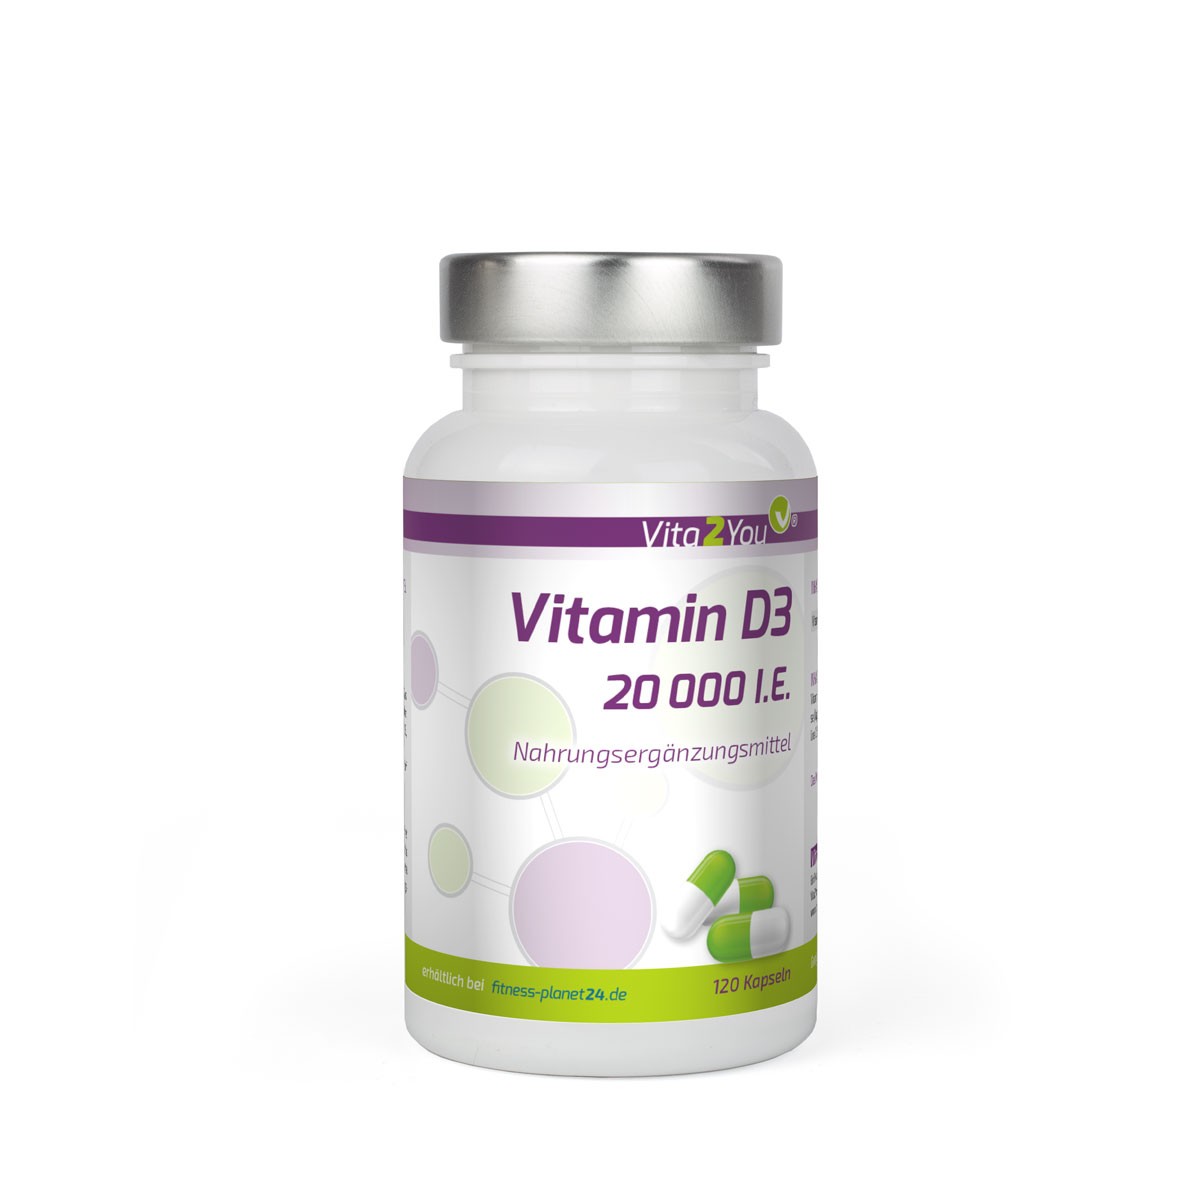 Vita2You Vitamin D3 20.000 IE (IU) - 120 Kapseln - Premium Qualit�t von vita2you